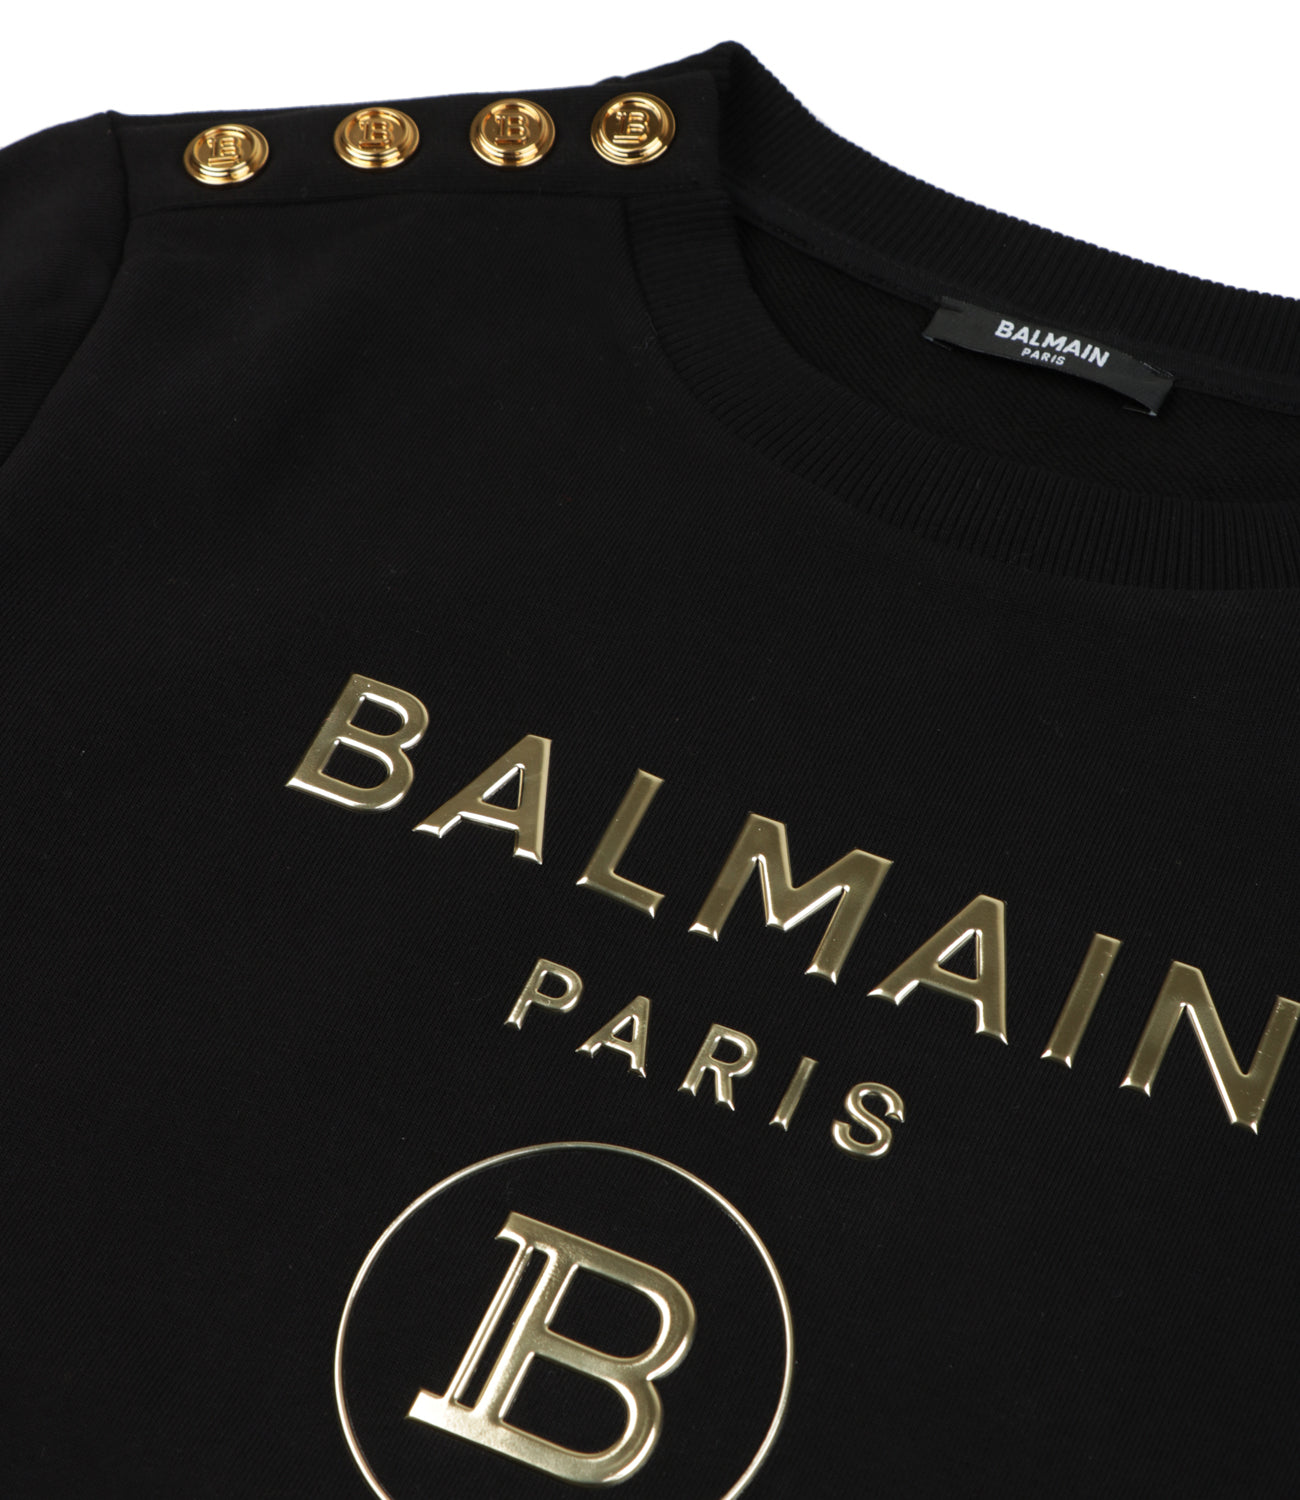 Balmain | Black and Gold Sweatshirt